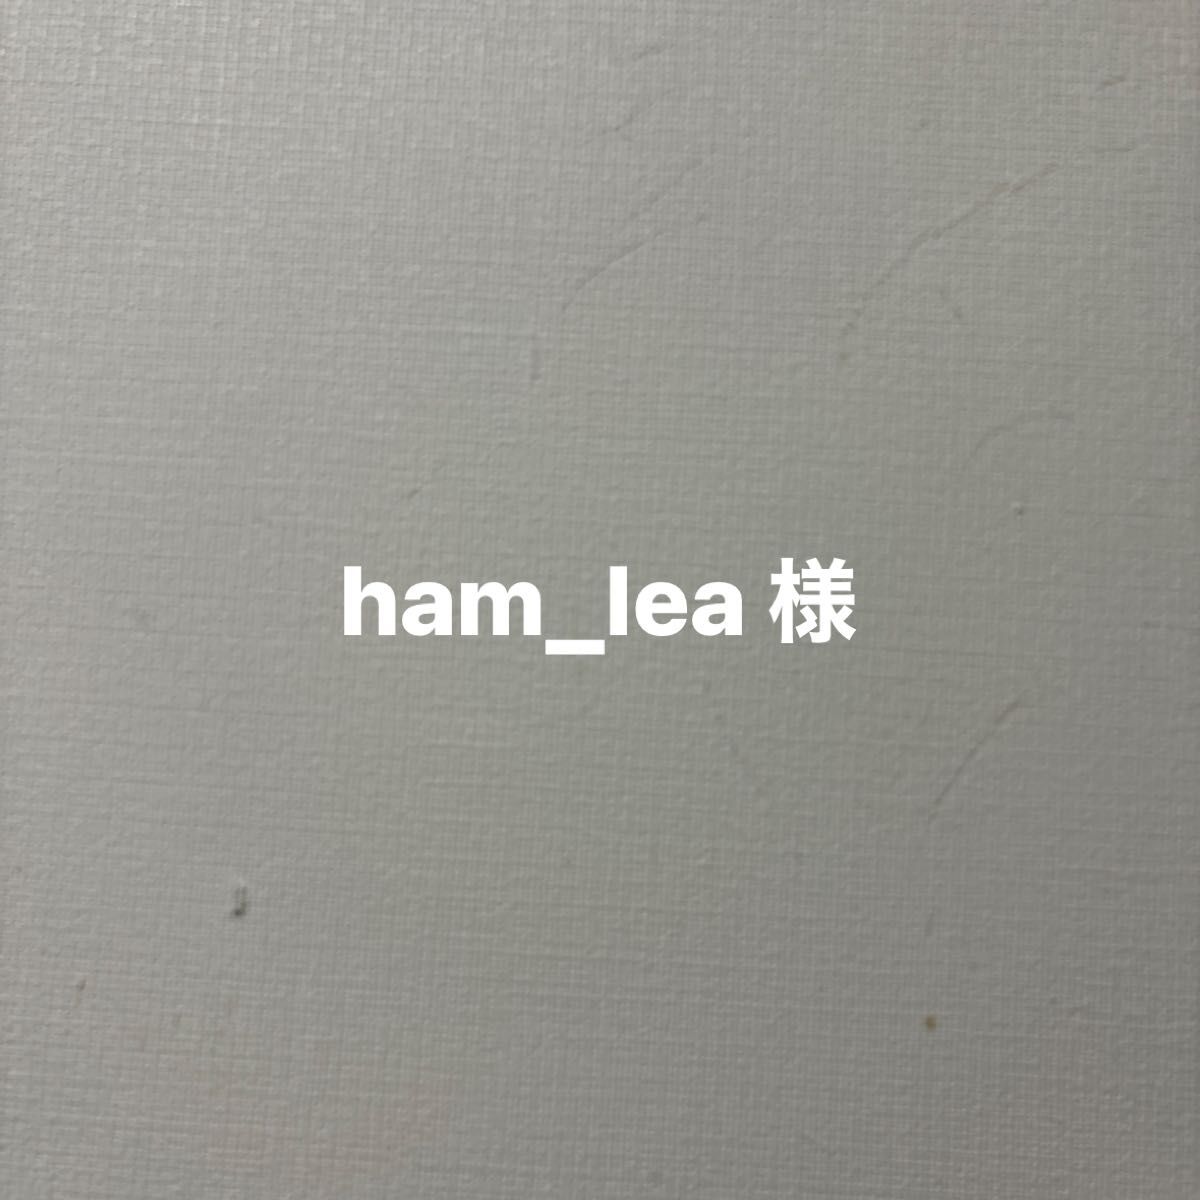 ham_lea 様